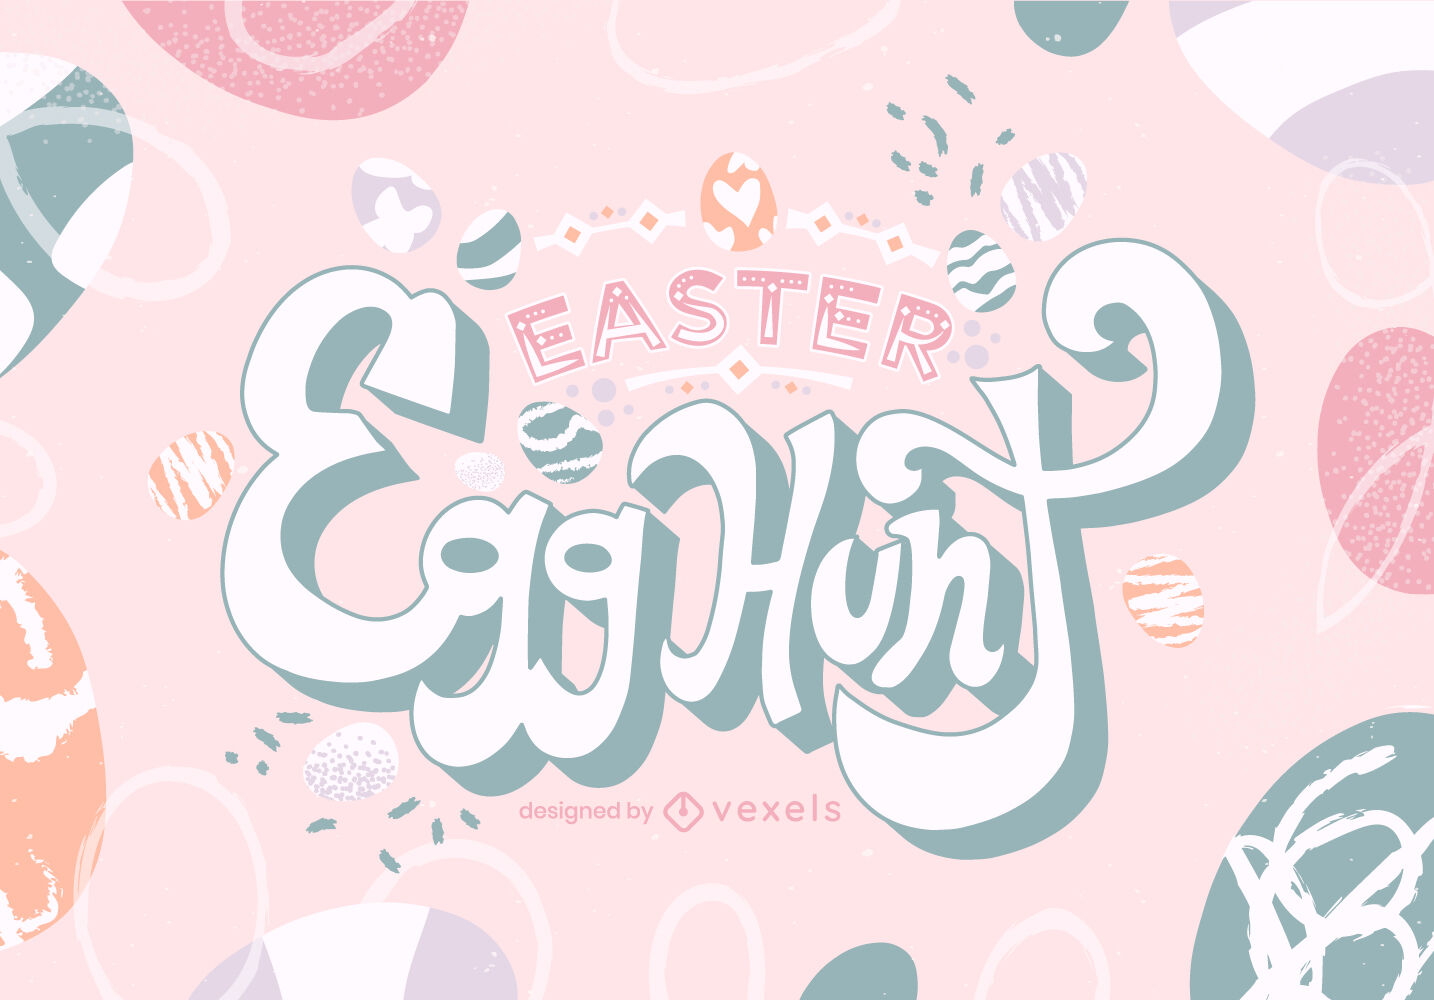 Easter egg hunt lettering